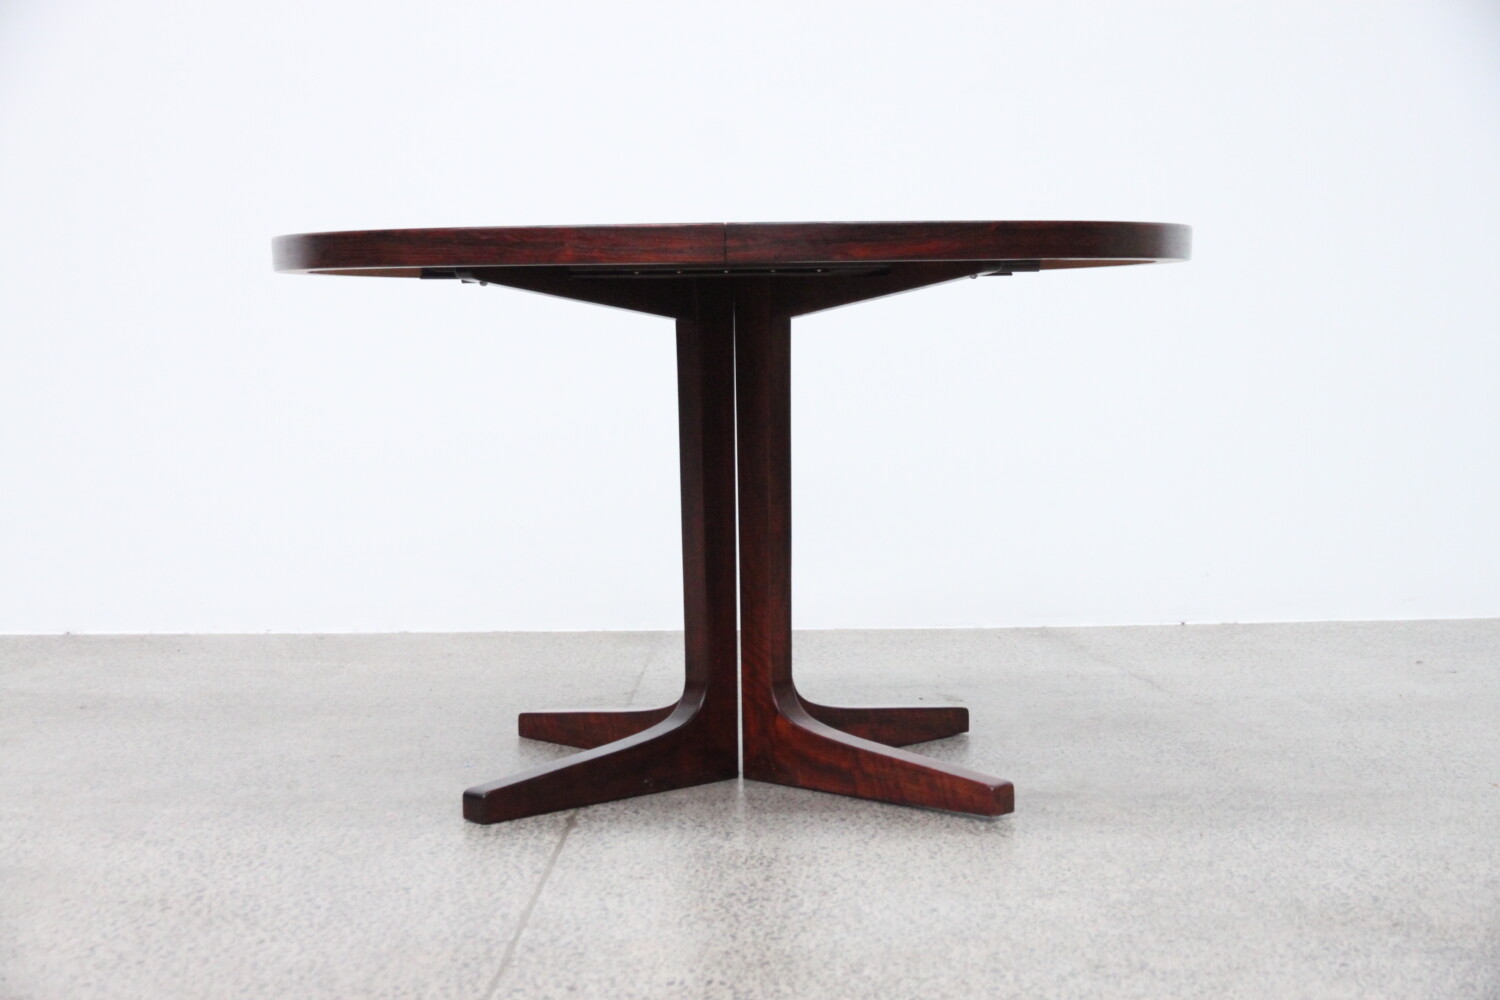 Rosewood Pedestal Table